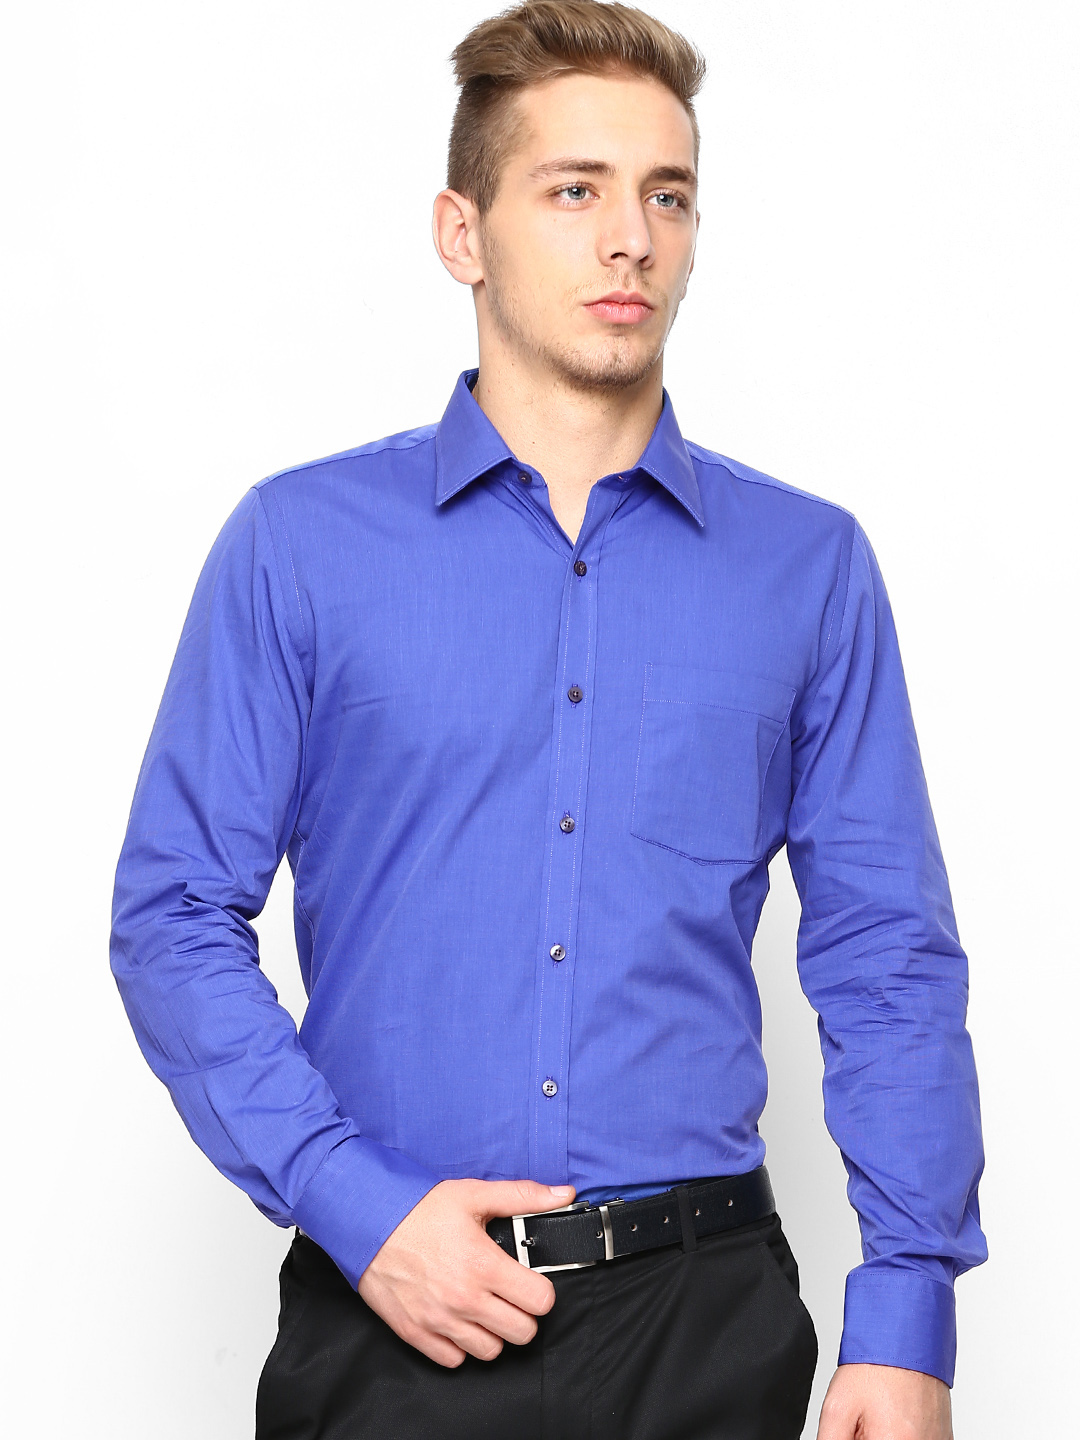 Buy Blue formal shirt for men Online in India - 83626438 - ShopClues.com